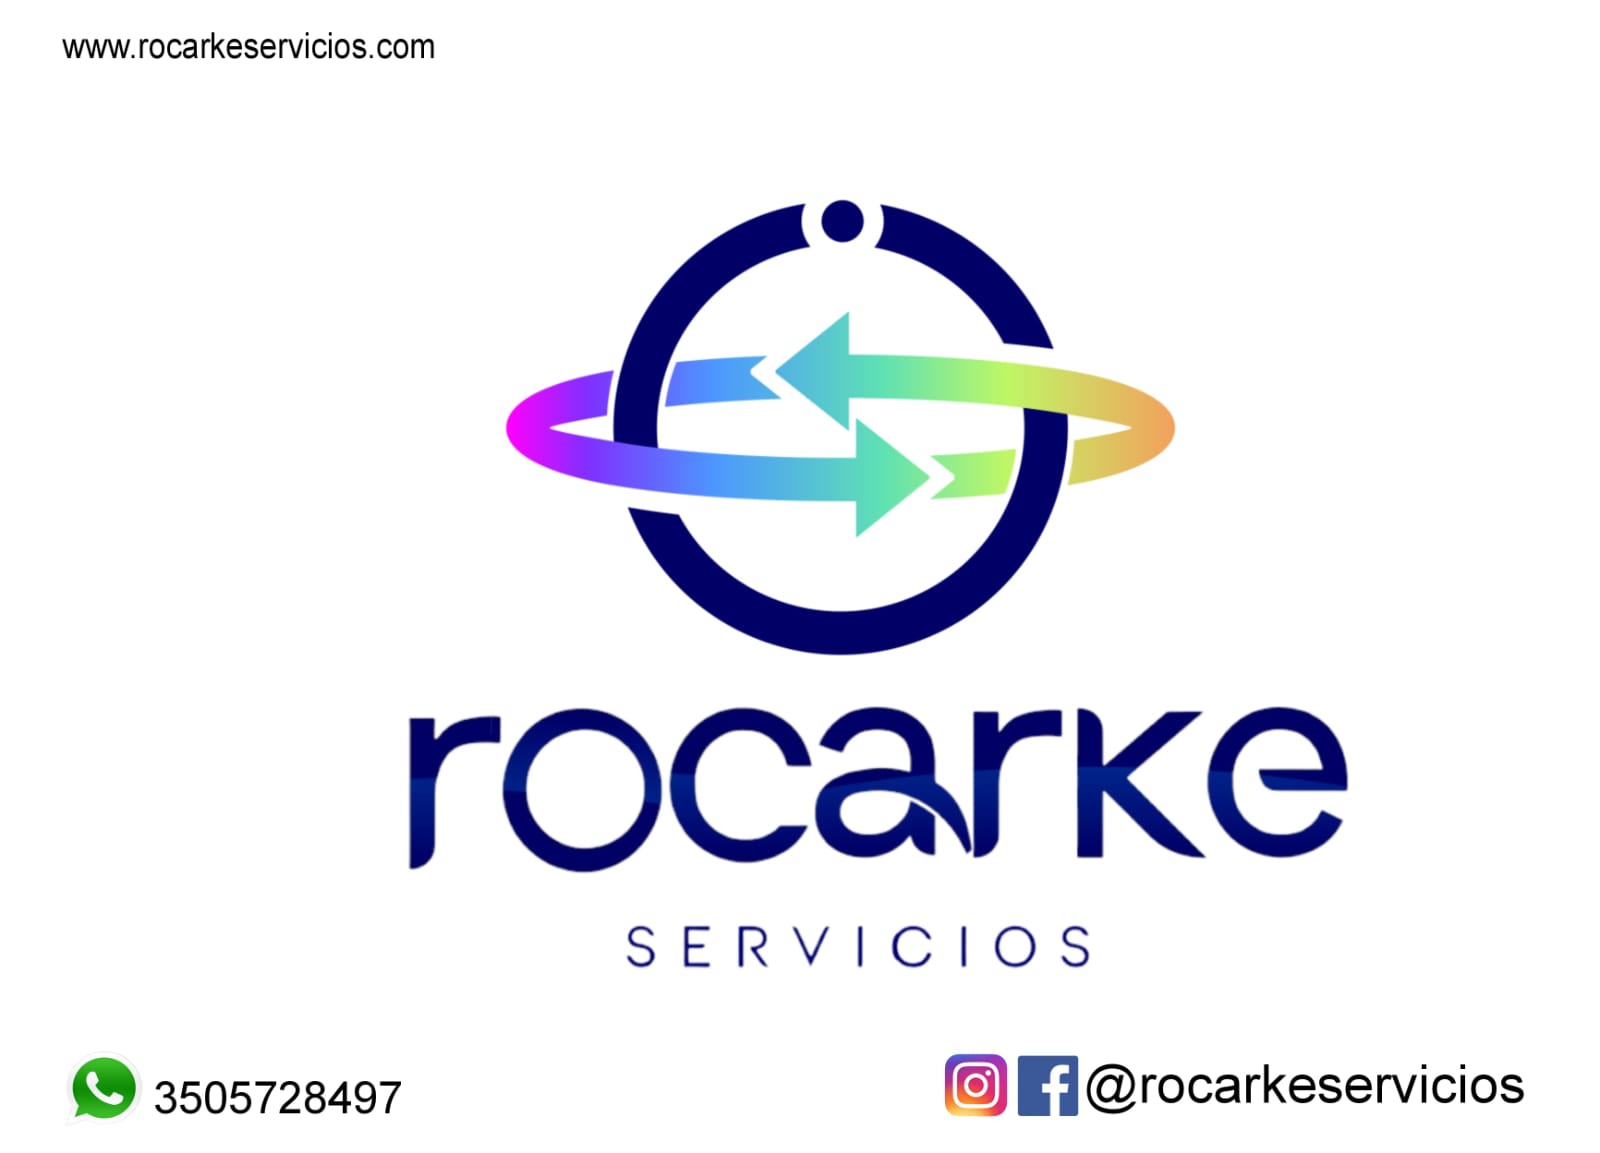 Rocarke Servicios inició en 2019